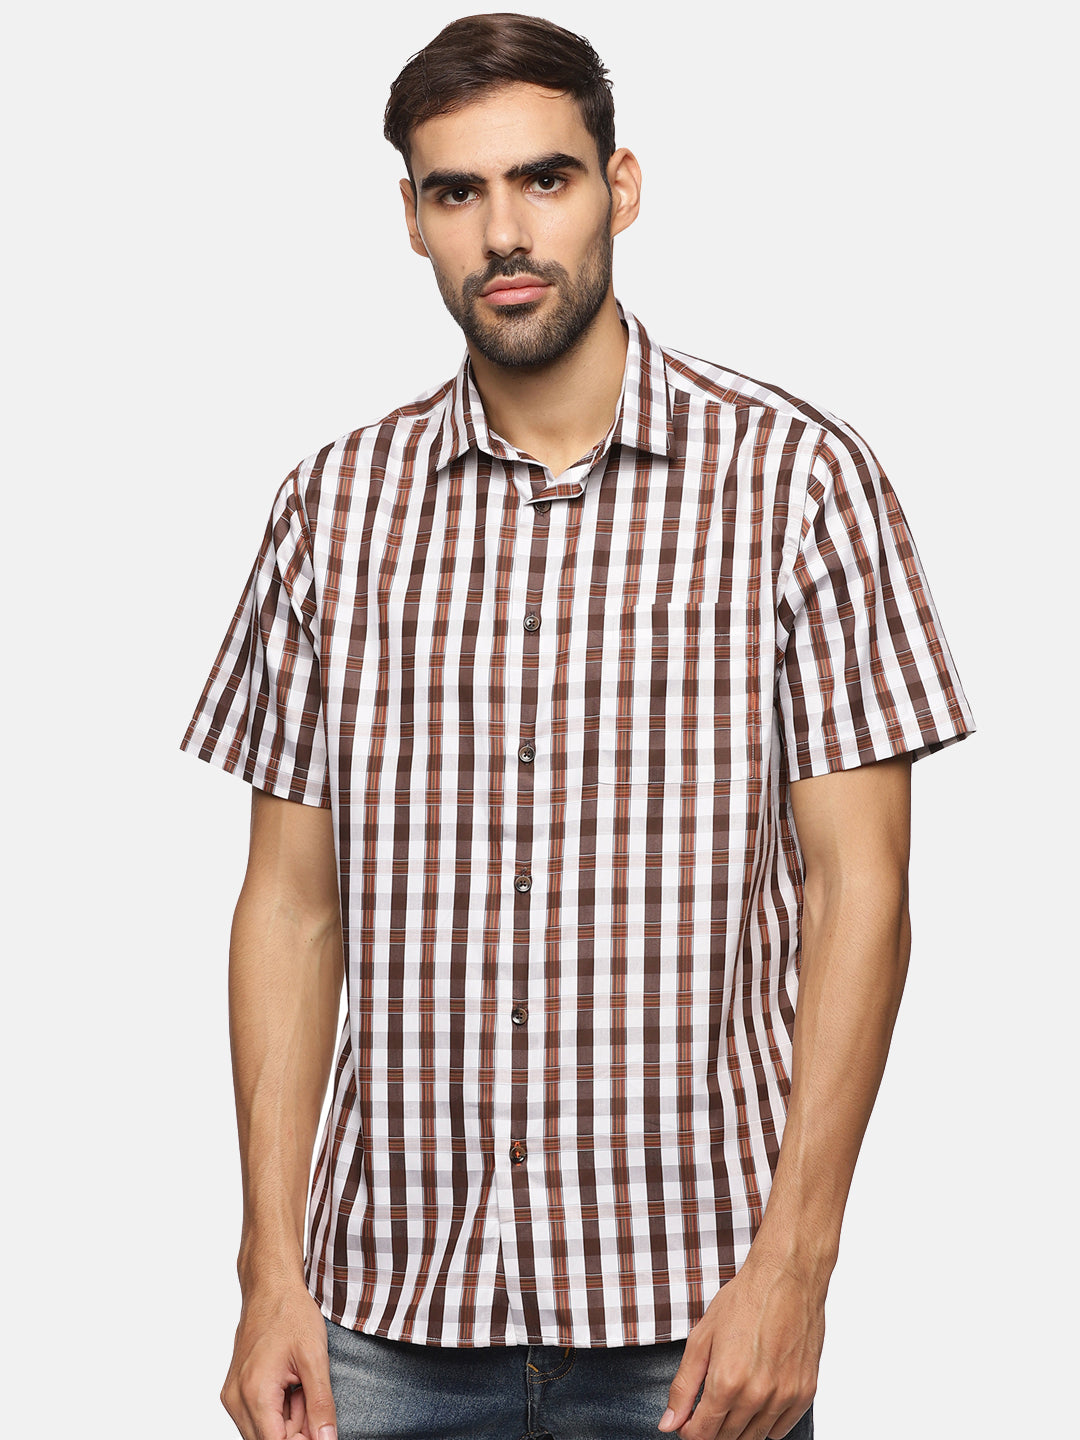 Men White & Brown Checkered Slim Fit Casual Shirt, Men's Half Sleeve Cotton Shirt